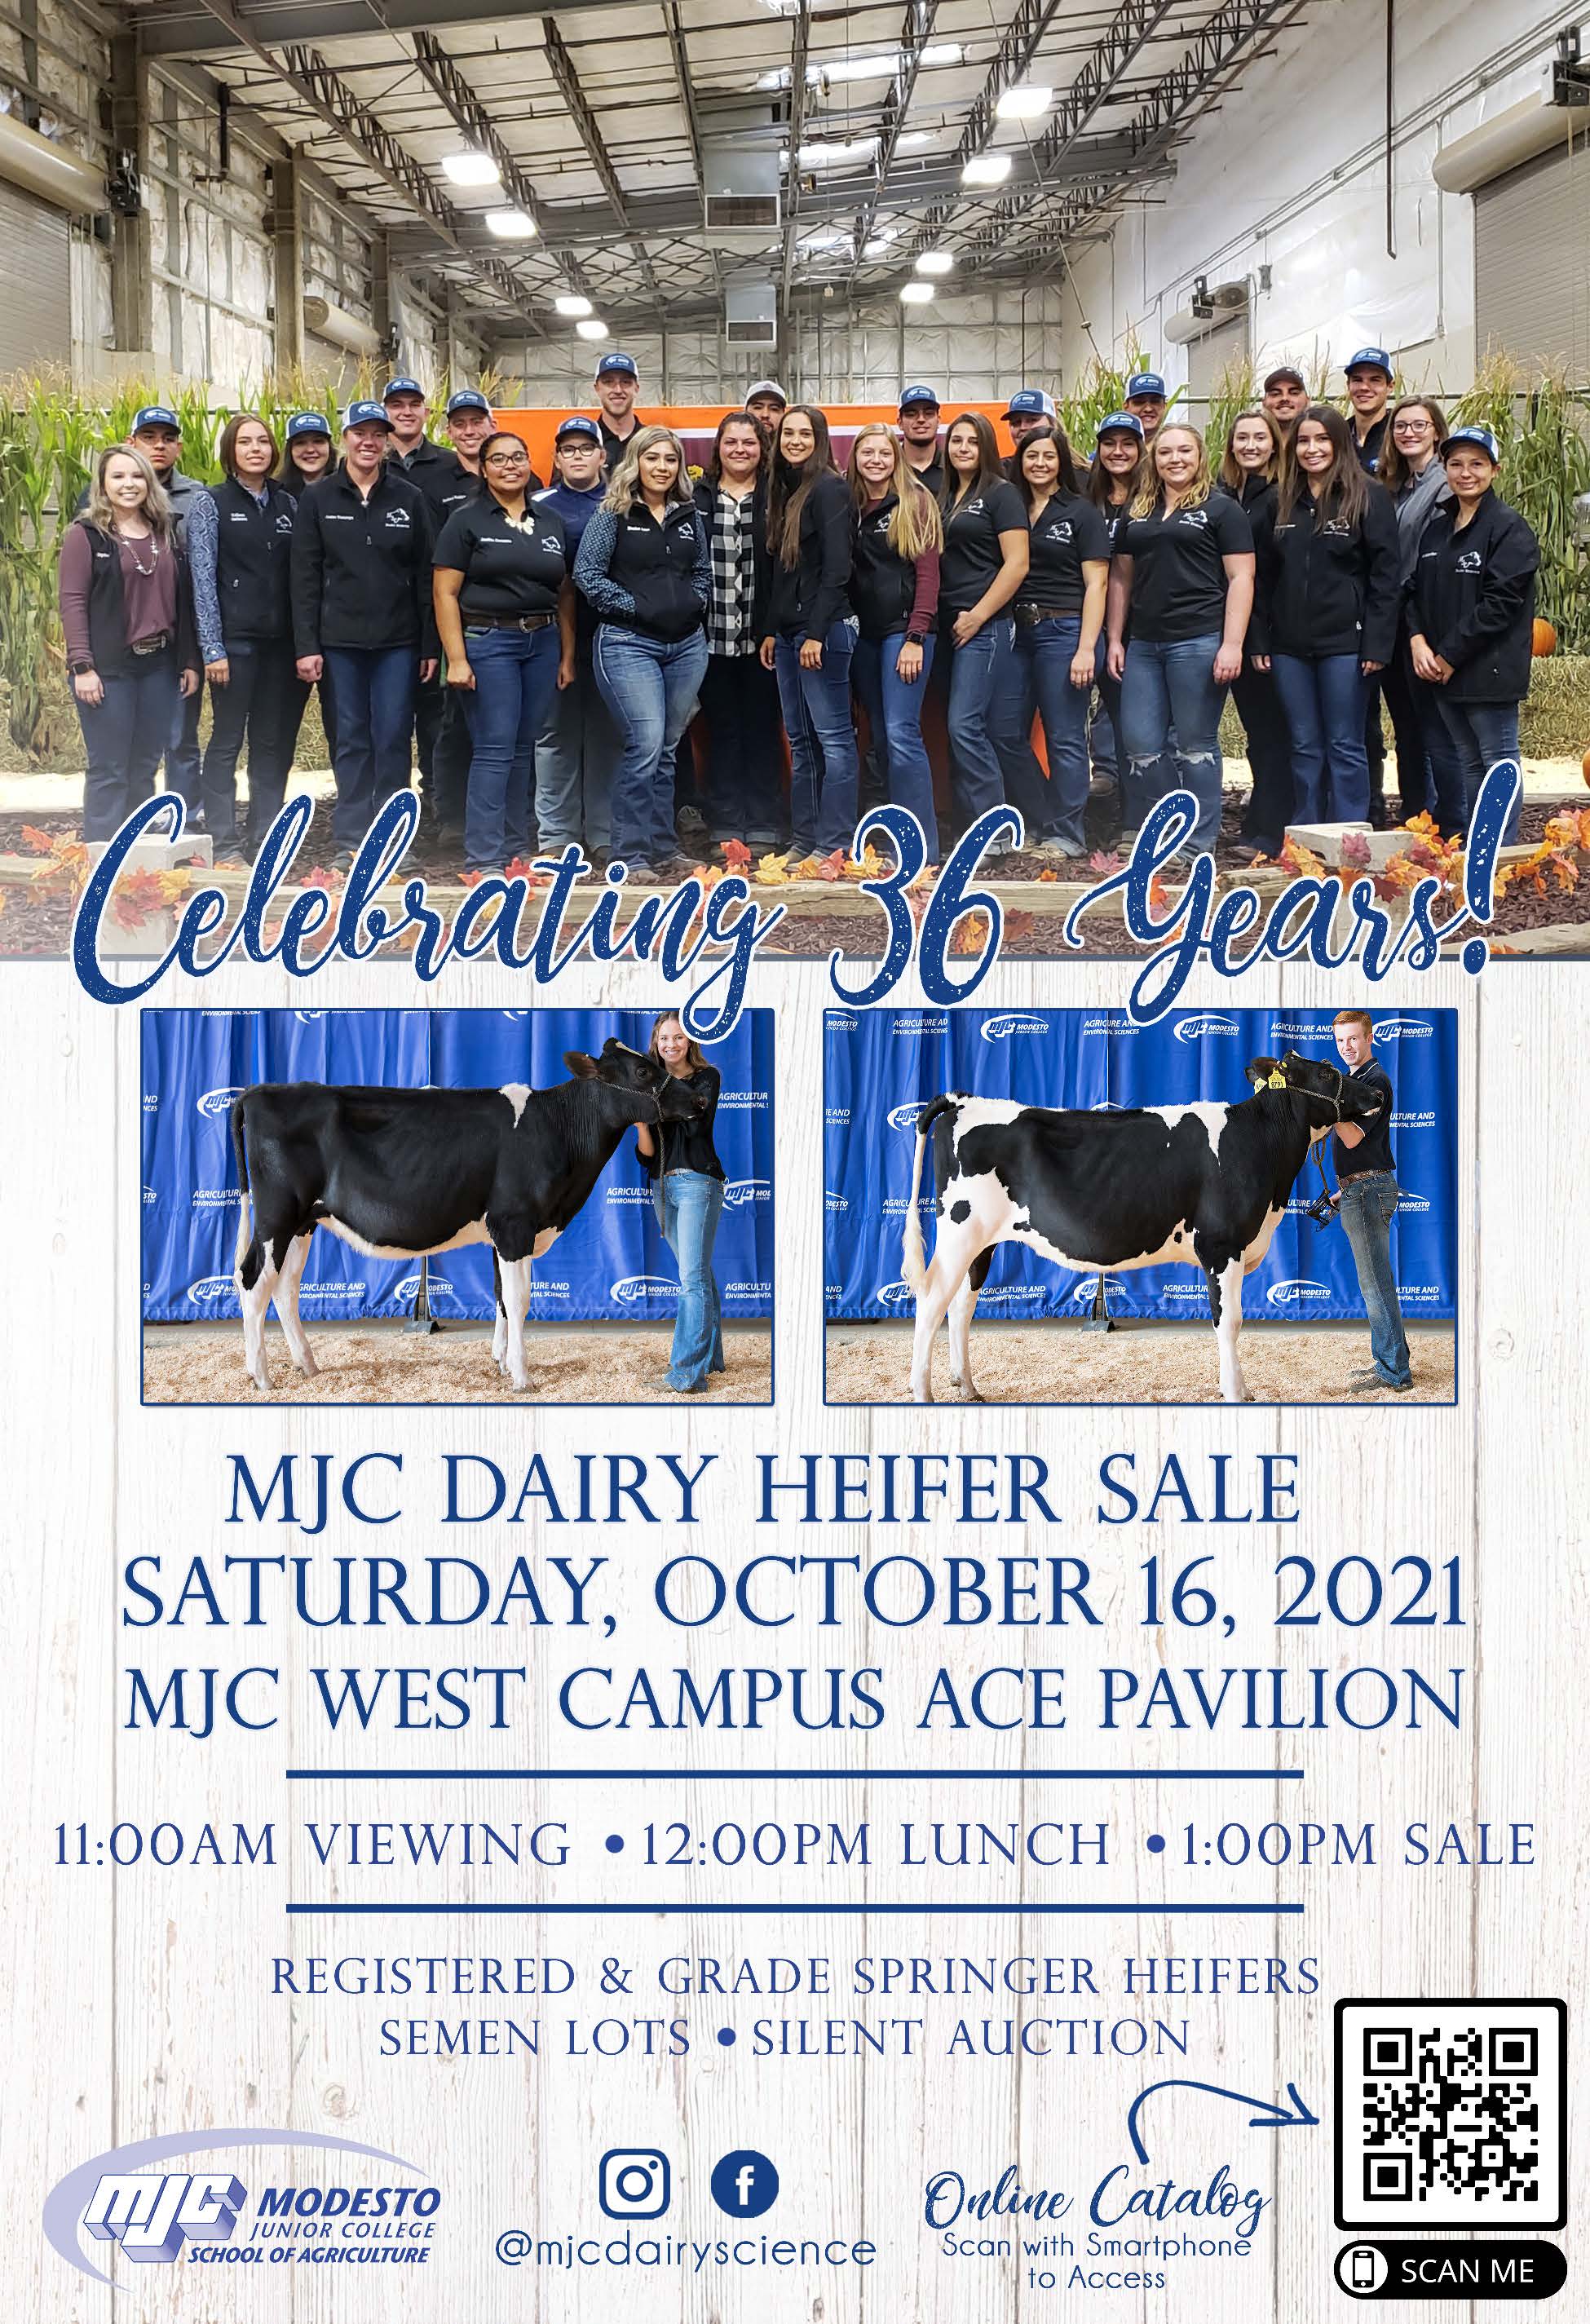 MJC Dairy Heifer Sale